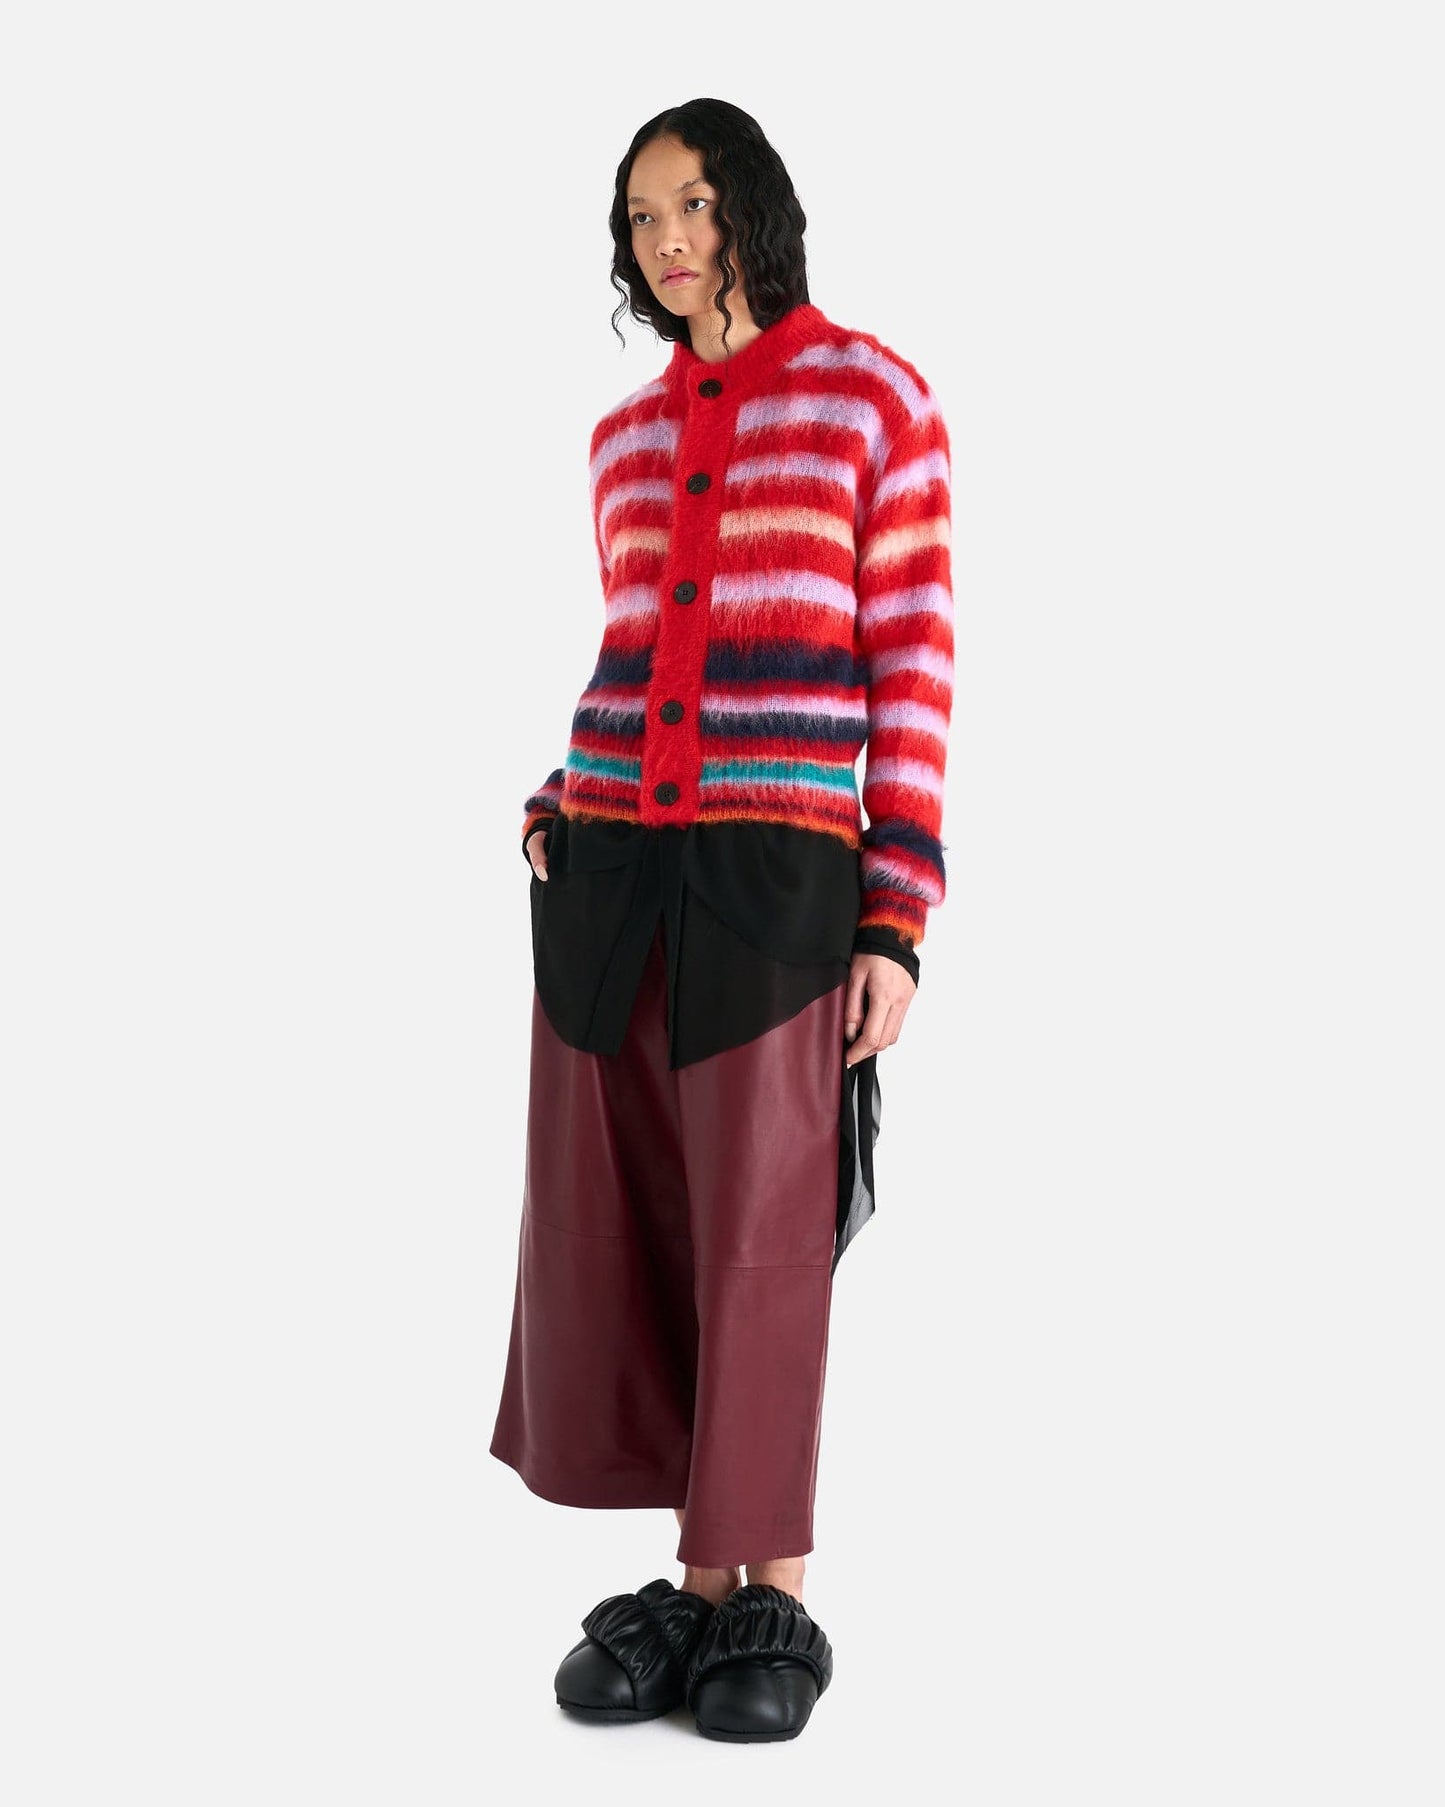 Edward Cuming Men's Sweater Women's Striped Cardigan in Red/Multi